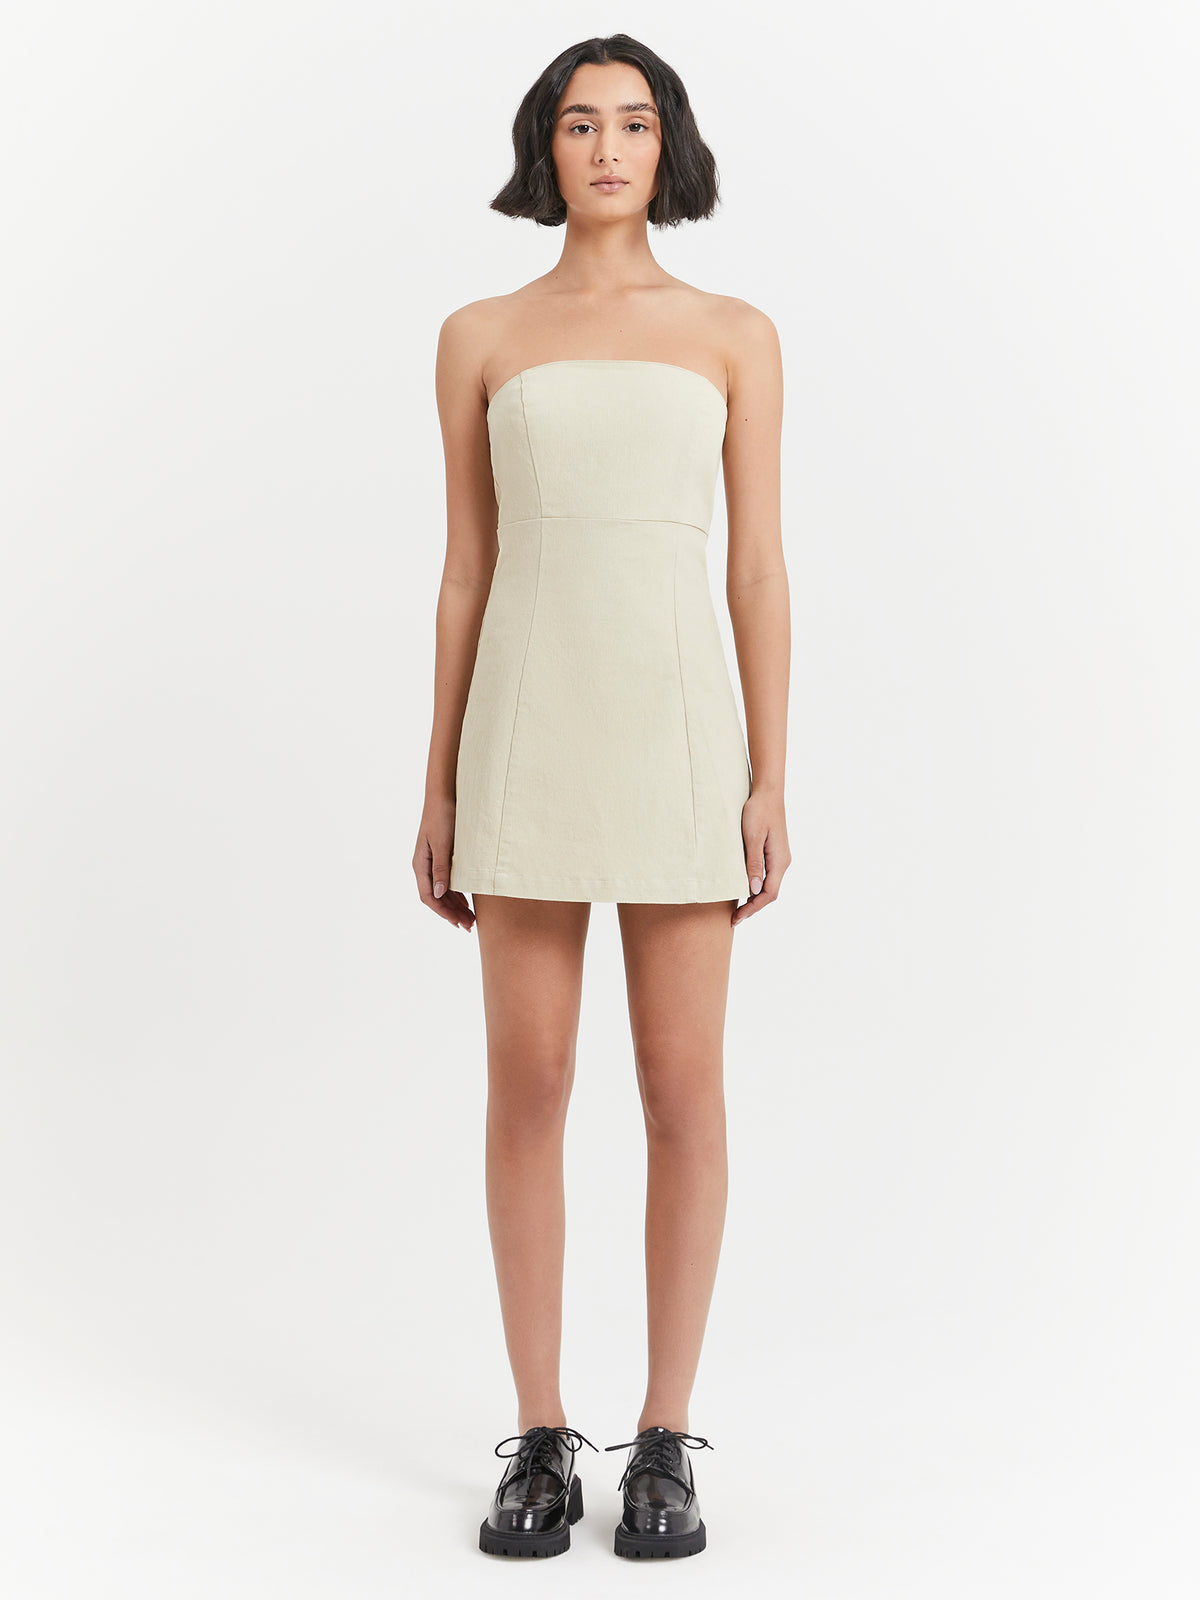 Carey Strapless Mini Dress in Oatmeal